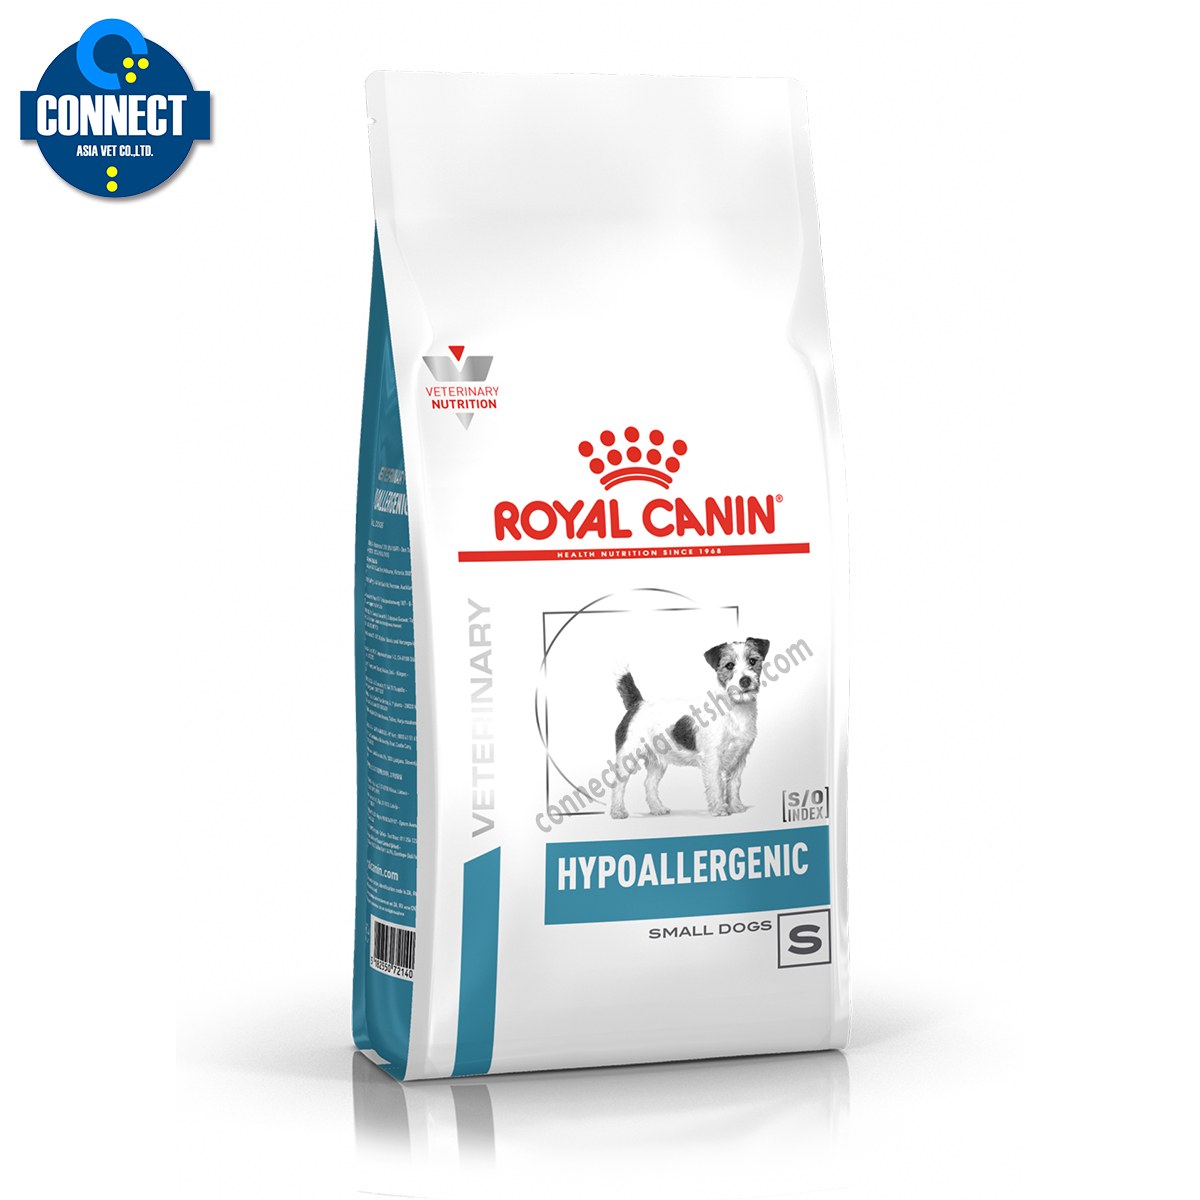 Royal Canin HYPOALLERGENIC SMALL DOGS สุนัขพันธุ์เล็กที่มีภาวะภูมิแพ้อาหาร  ขนาด 3.5 กิโลกรัม